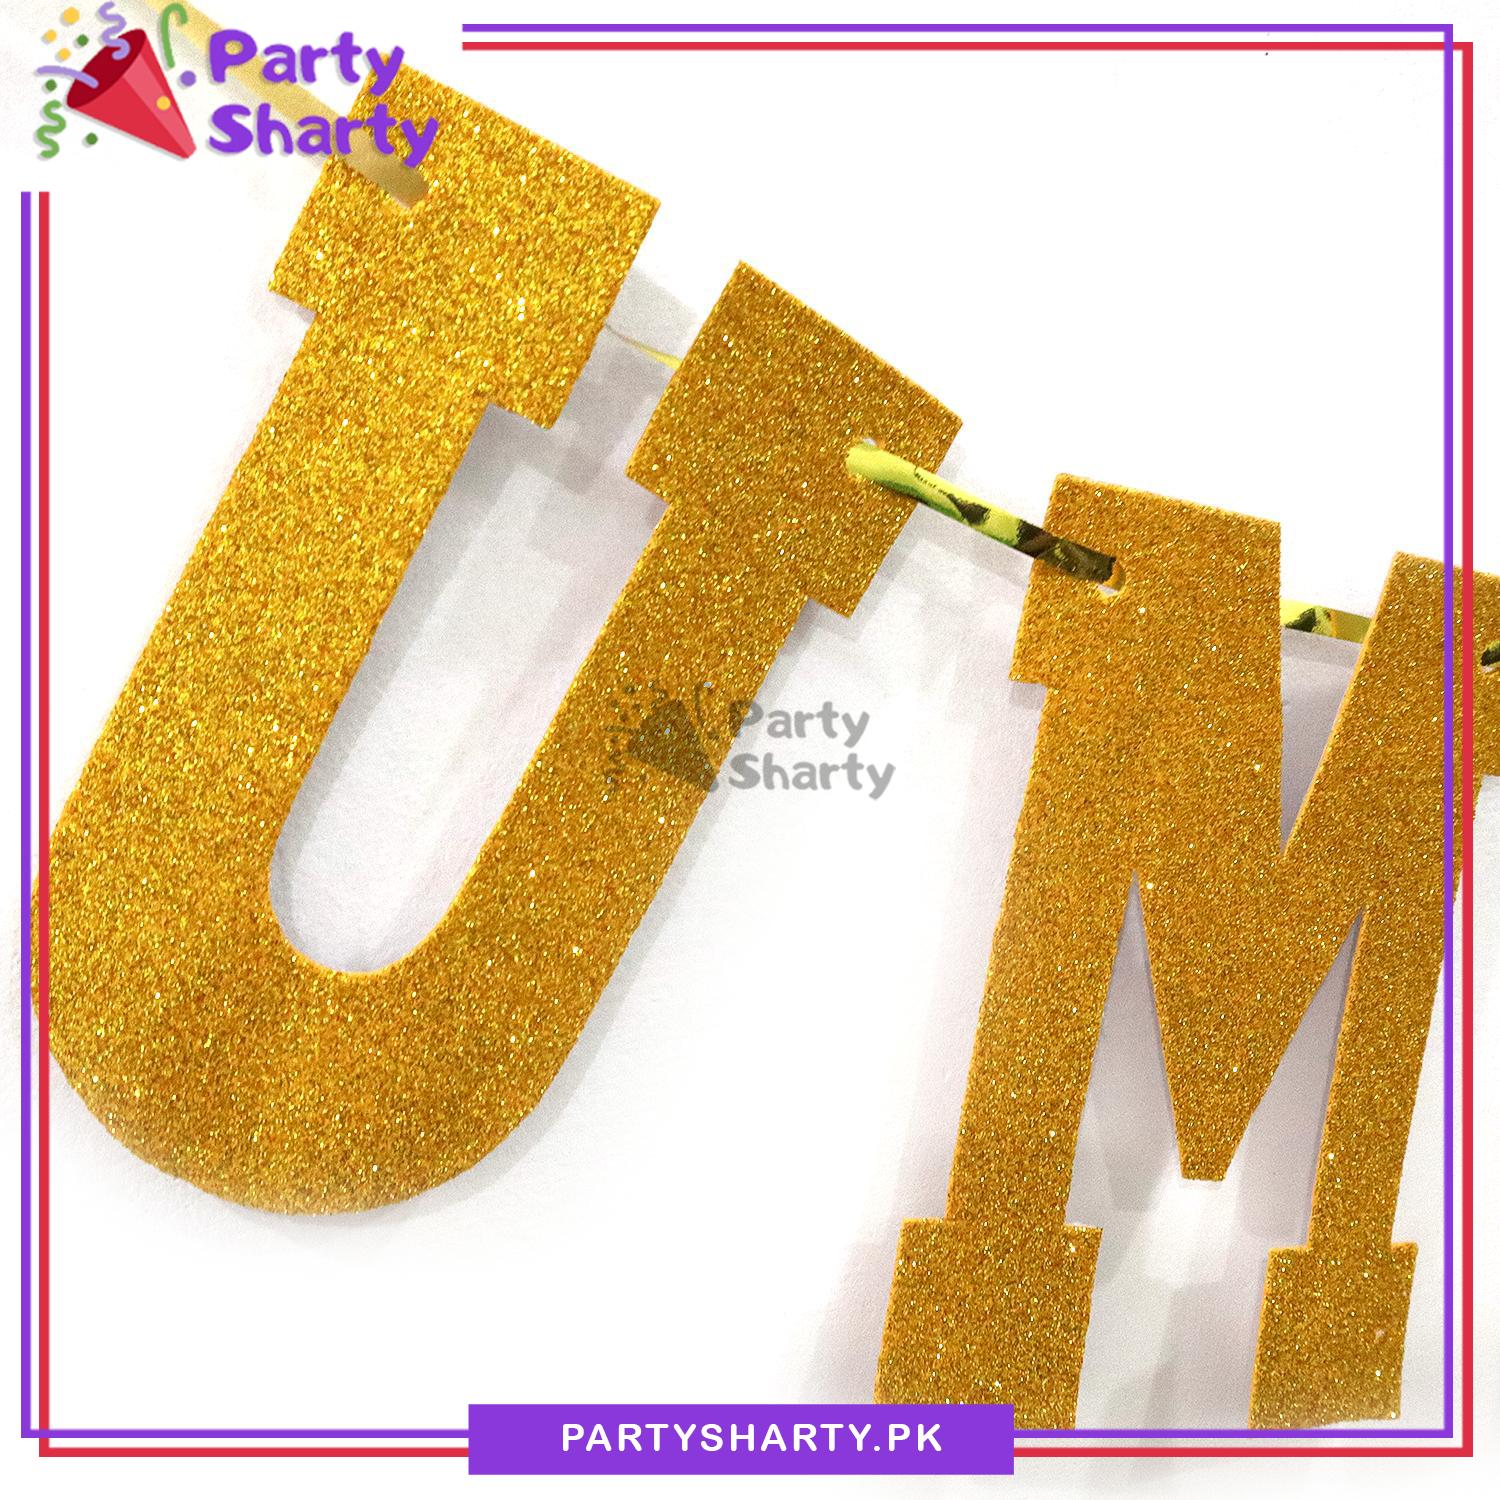 UMRAH MUBARAK Glitter Foamic Banner For Theme Decoration and Celebration